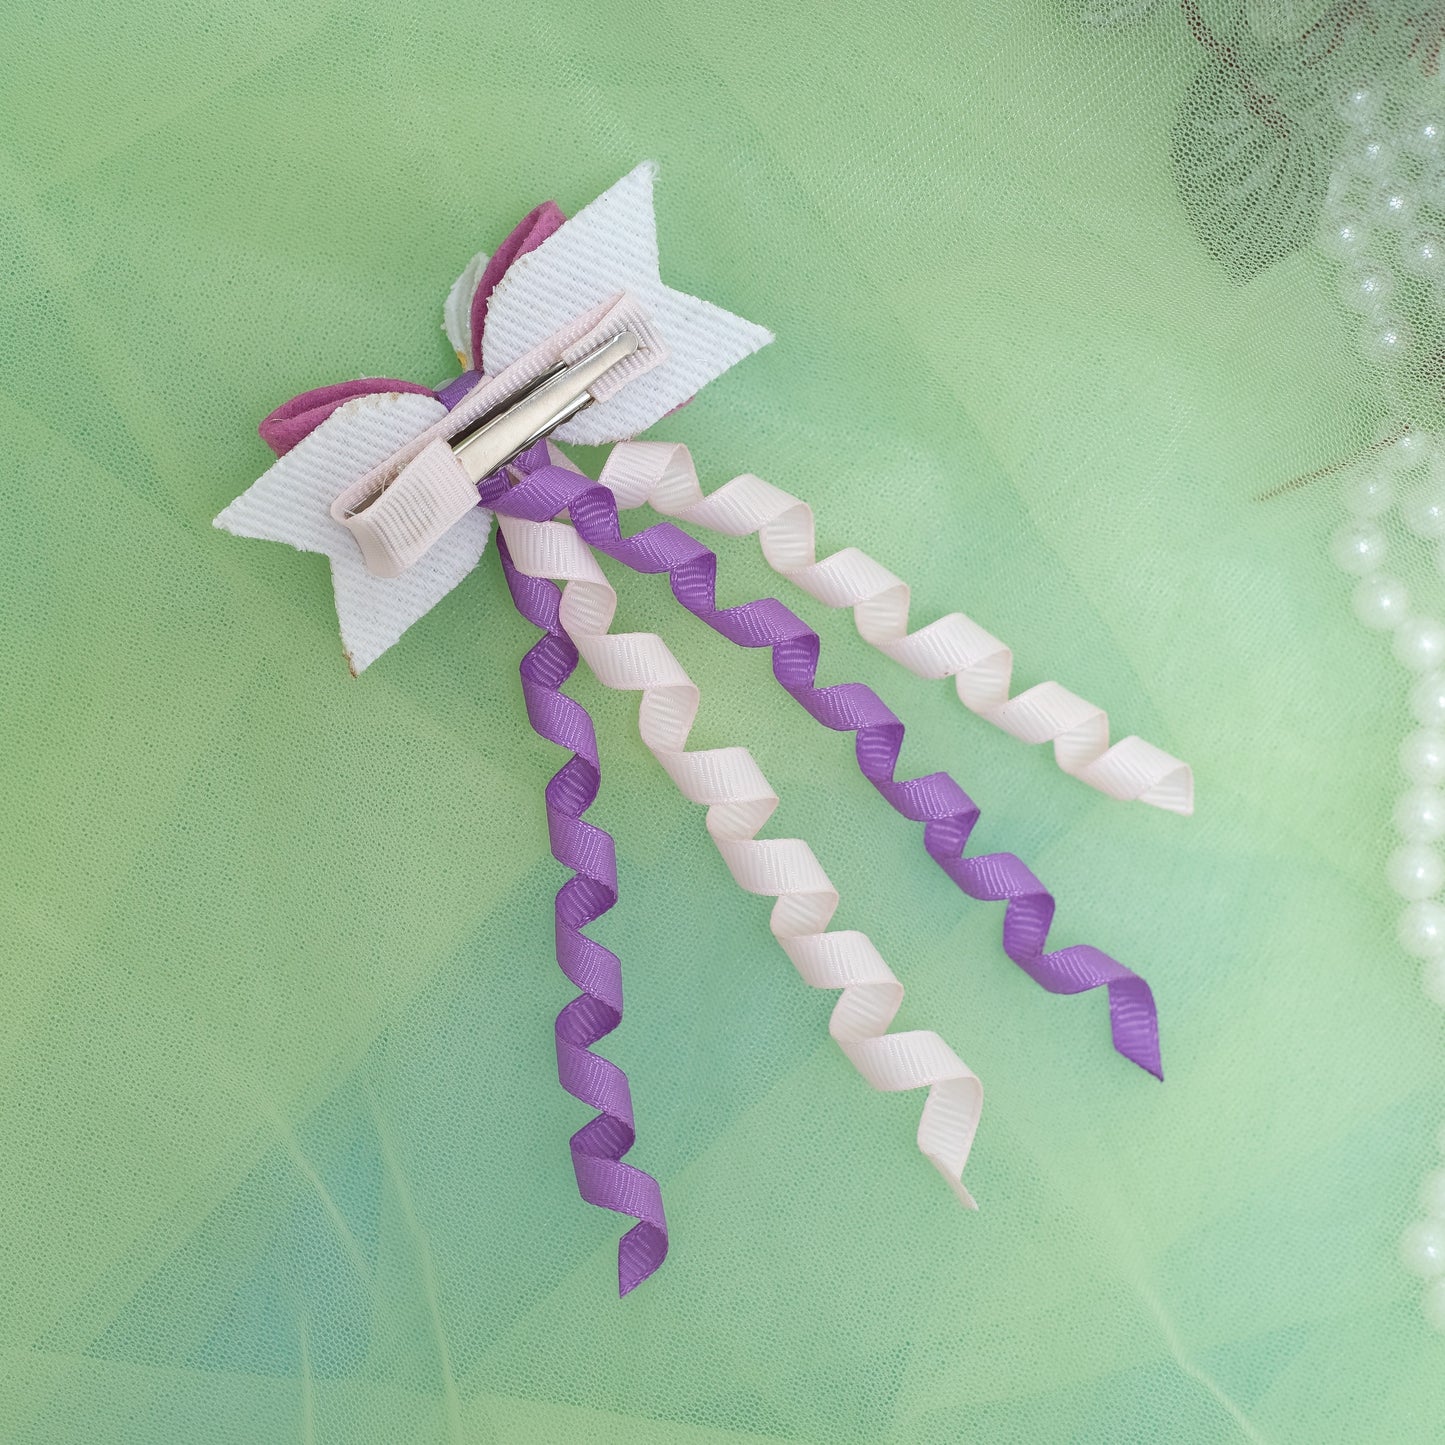 Dangler Hair-pin with Fancy Shimmer Bow for Party -  Light Blue, Light pink, Purple (1 Dangler on Alligator clip )